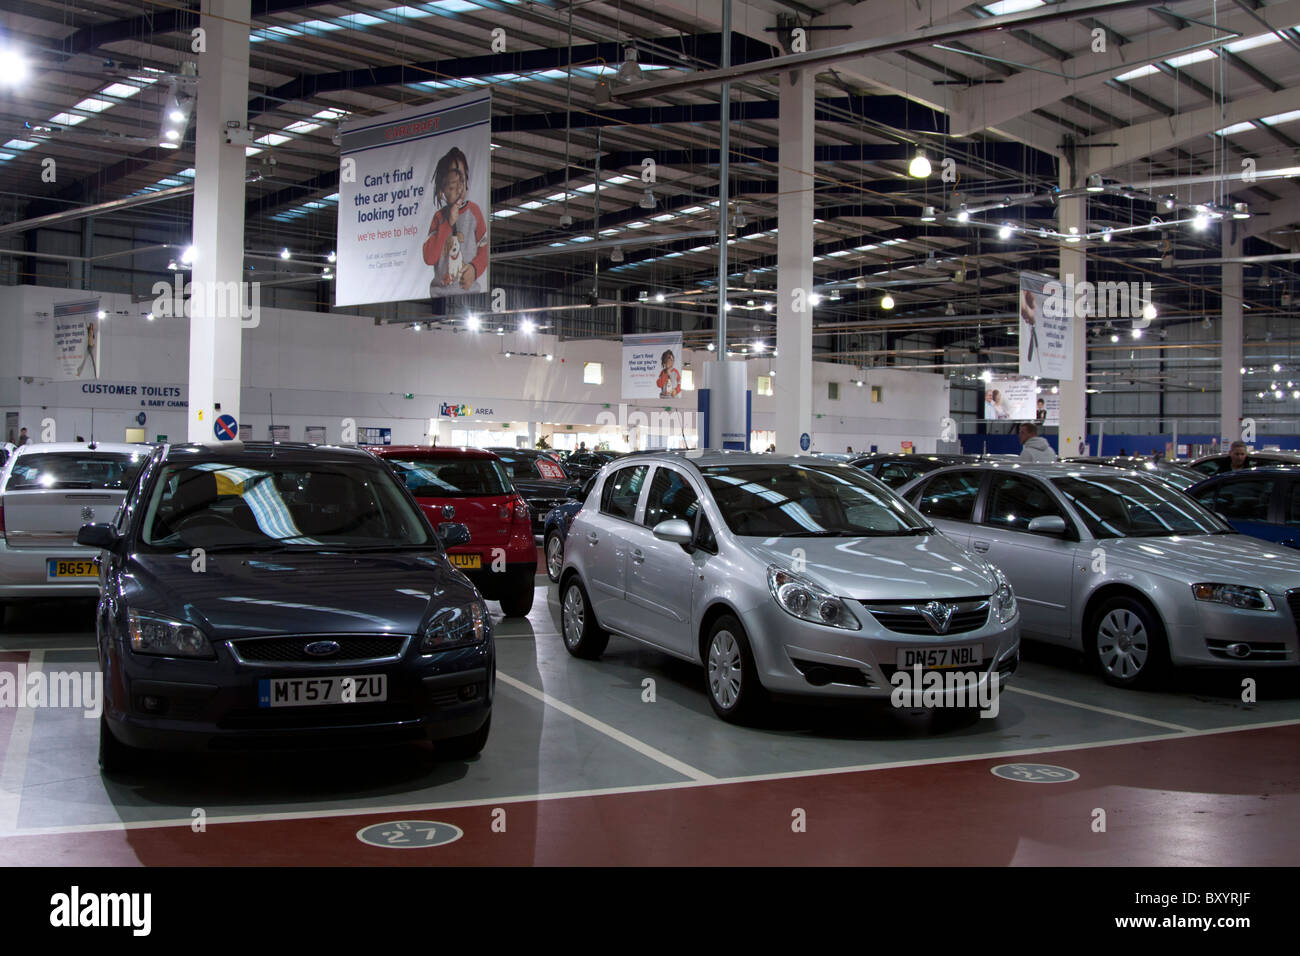 Carcraft verwendet Car Showroom - Enfield - London Stockfoto